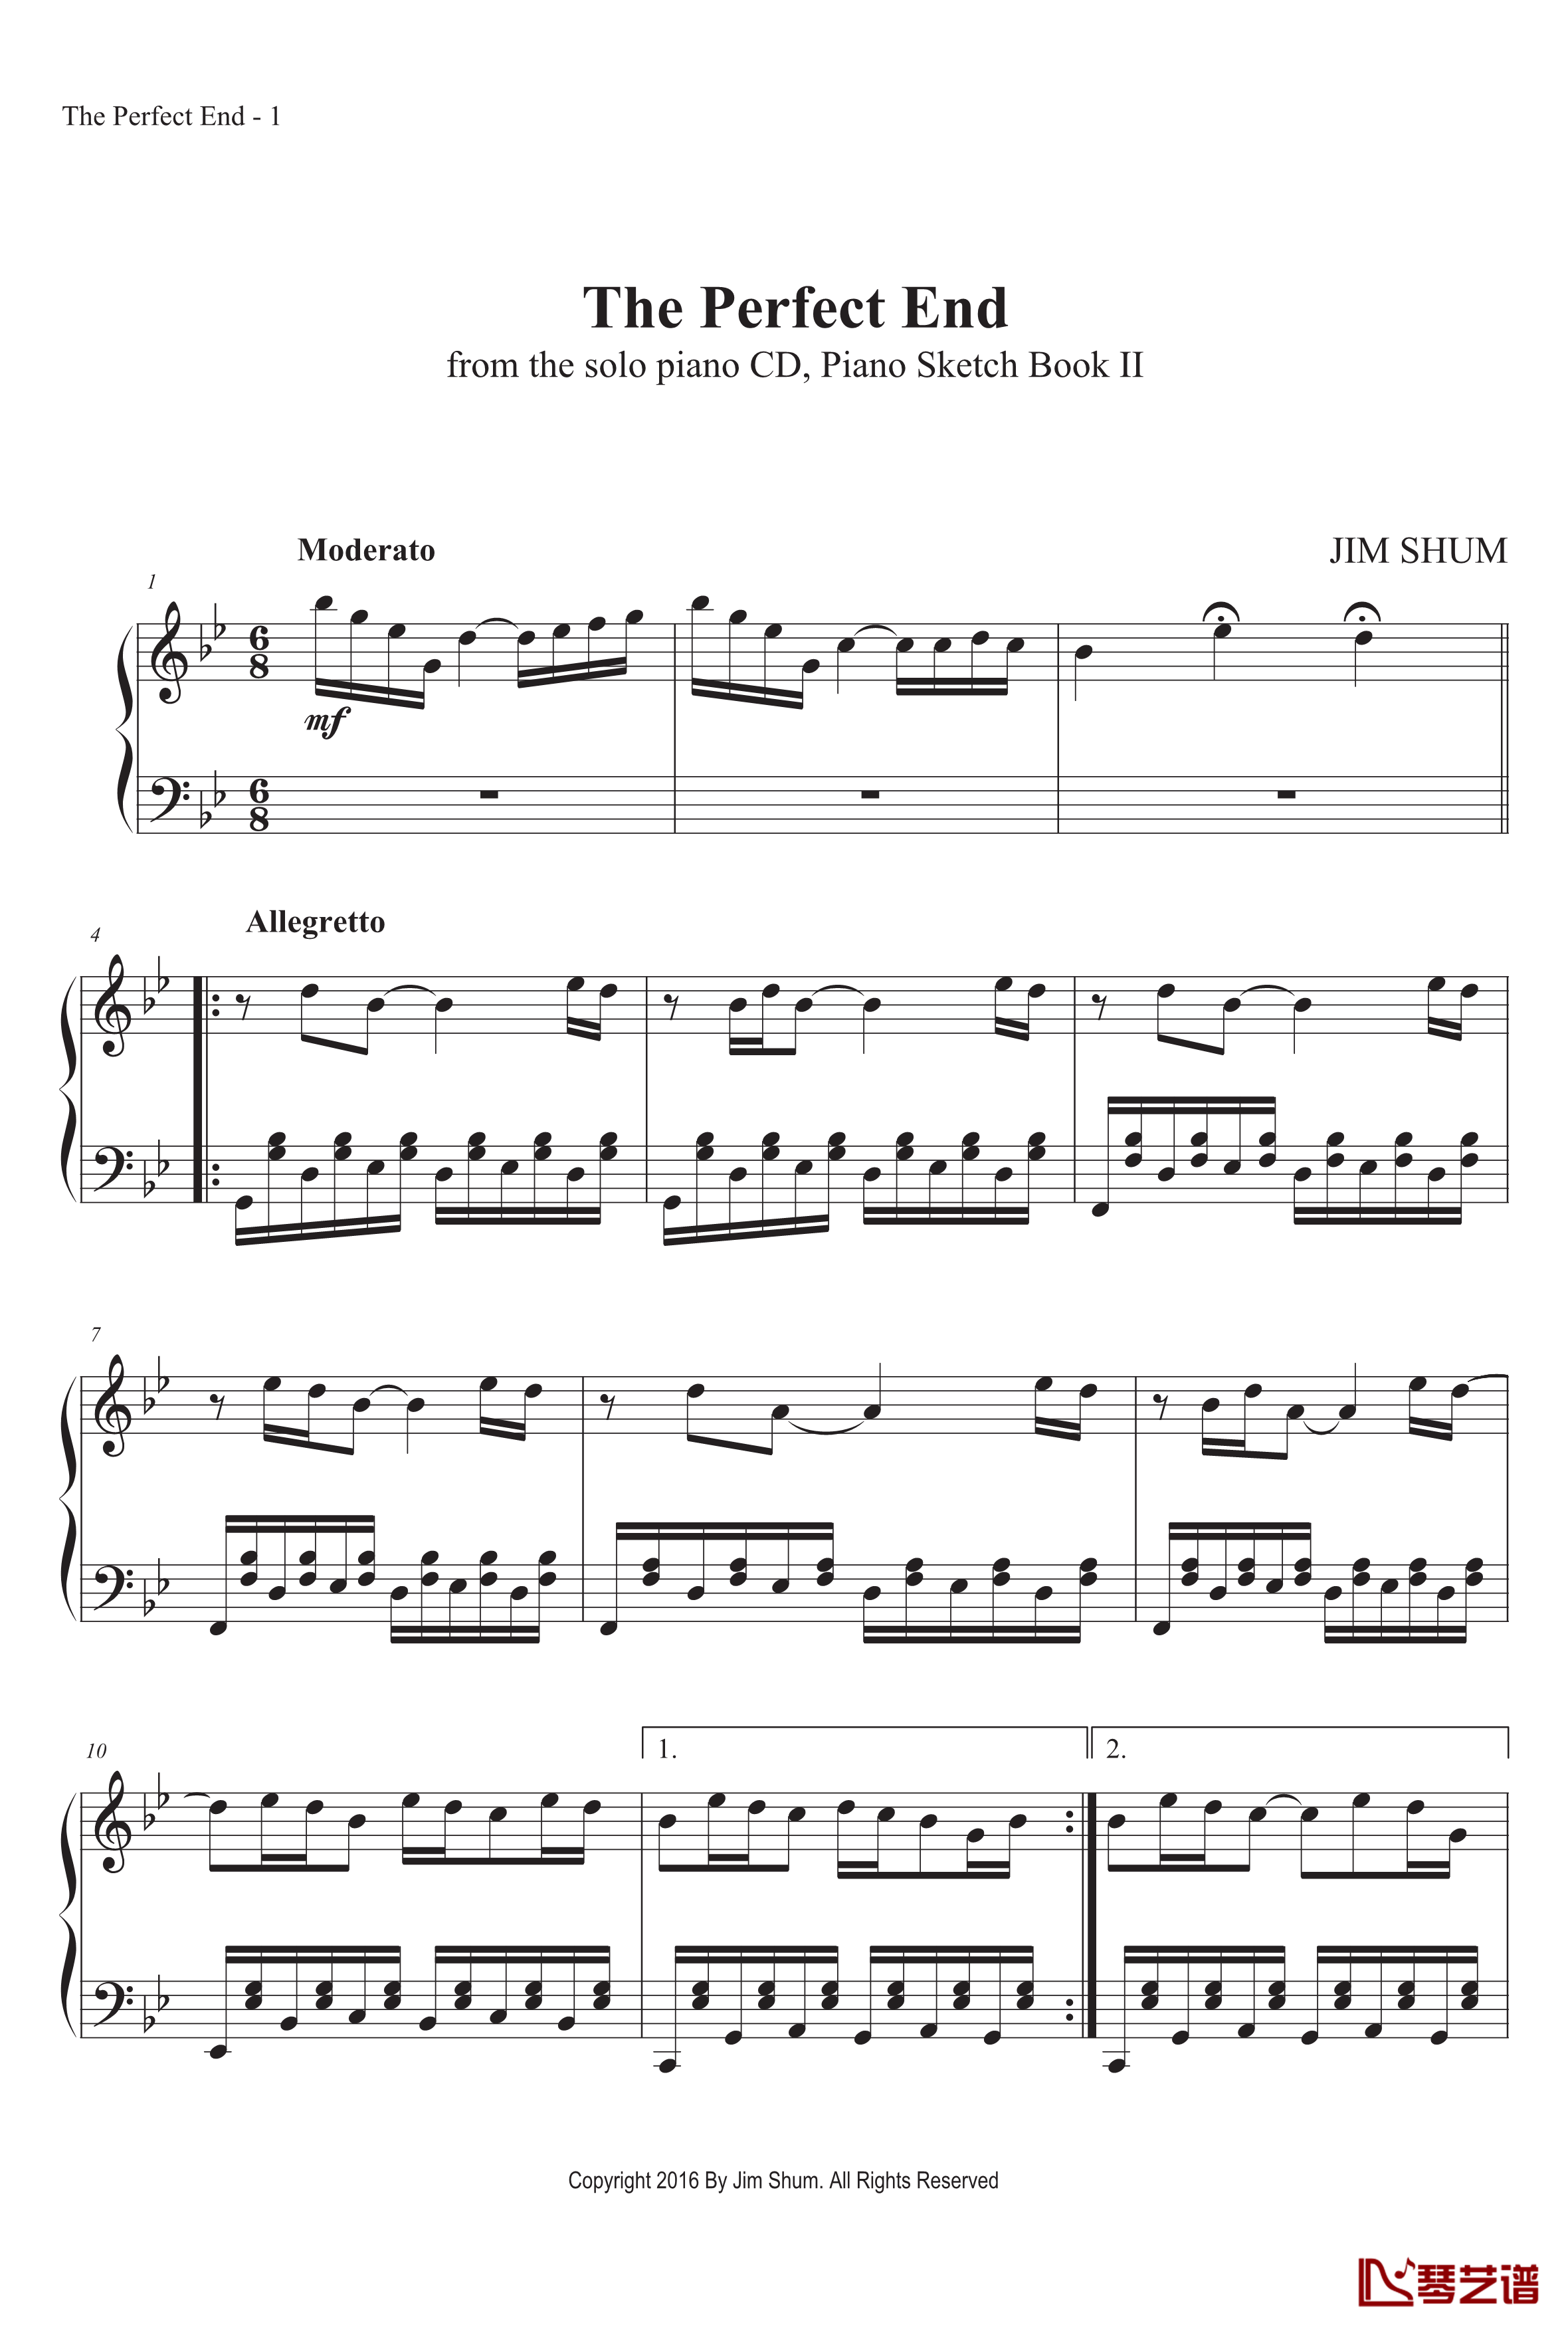 PERFECT END钢琴谱-MrSHUM2